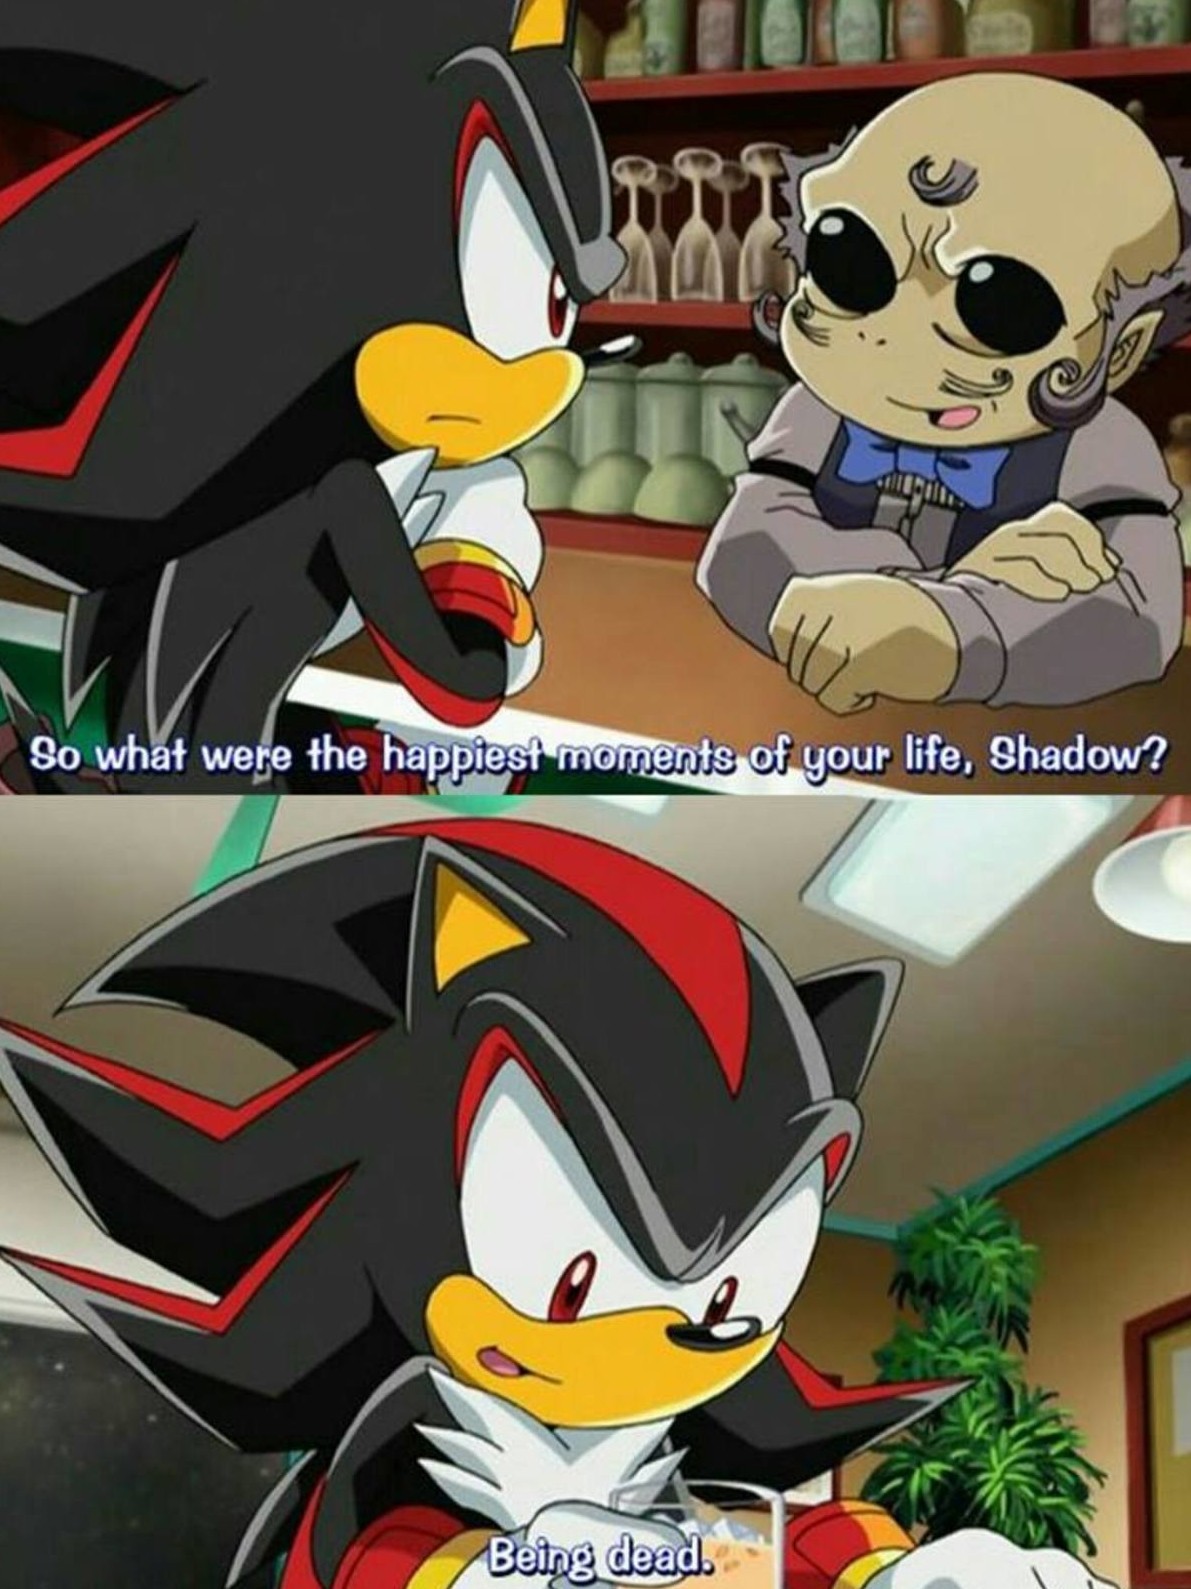 Shadow the Edgehog for Smash Ultimate plz Nintendo - meme